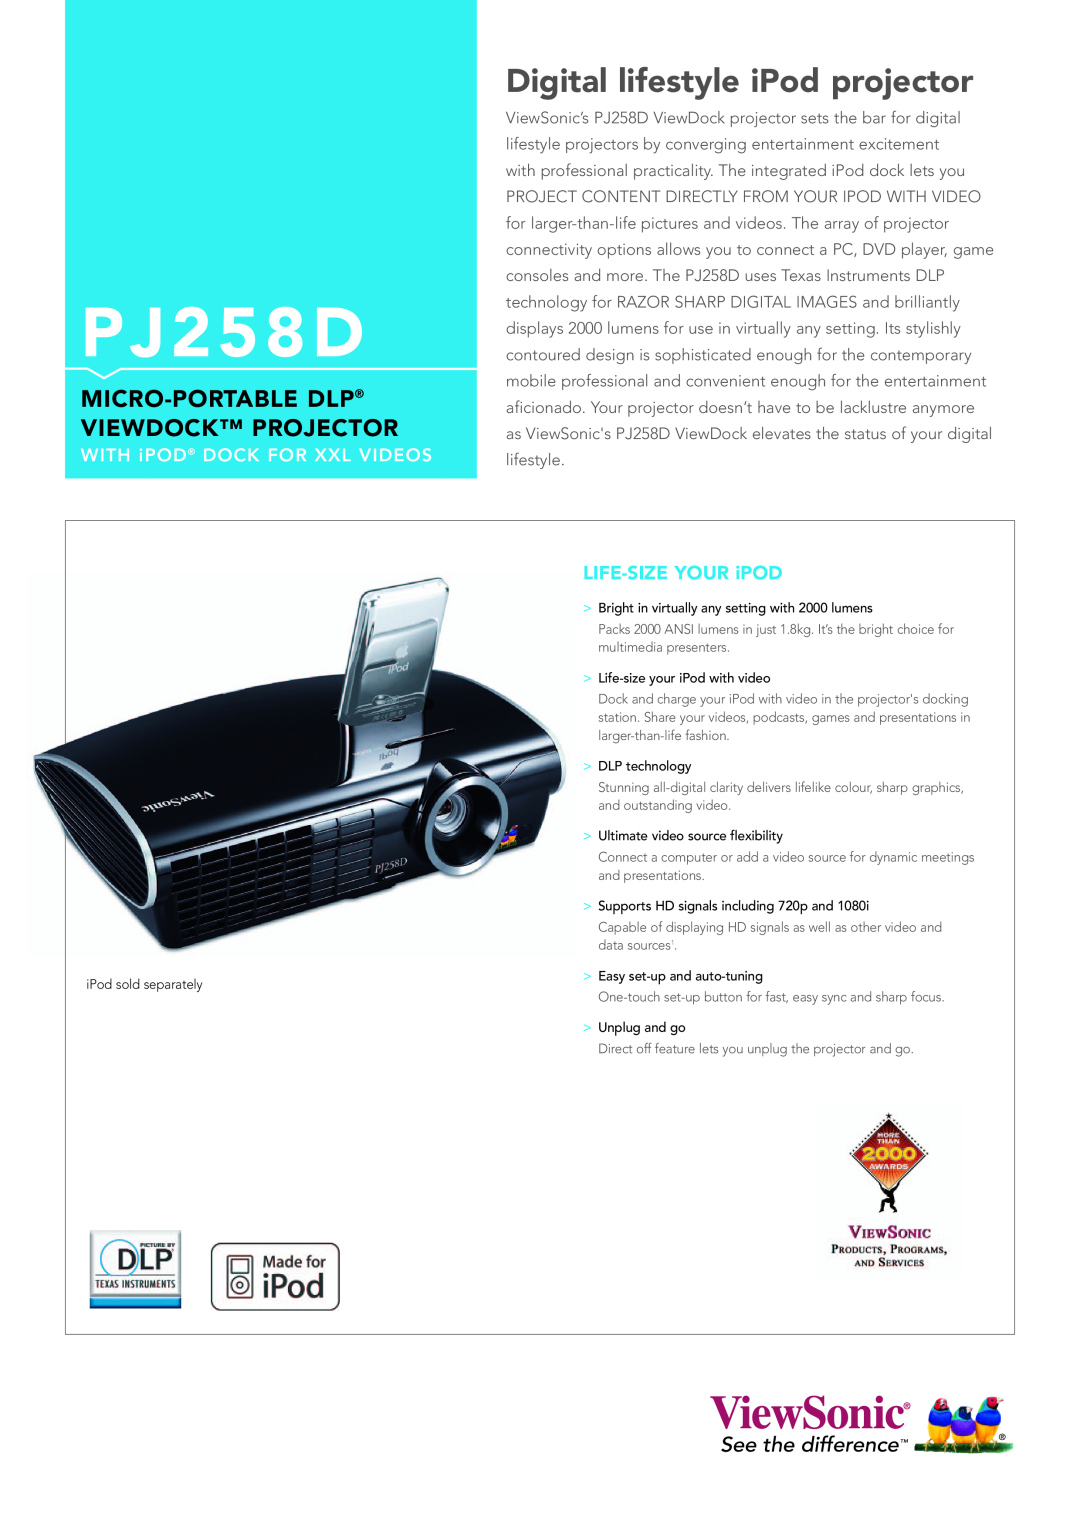 ViewSonic PJ258D manual Micro-Portabledlp Viewdock Projector, LIFE-SIZEYOUR iPOD, P J 2 5 8 D 